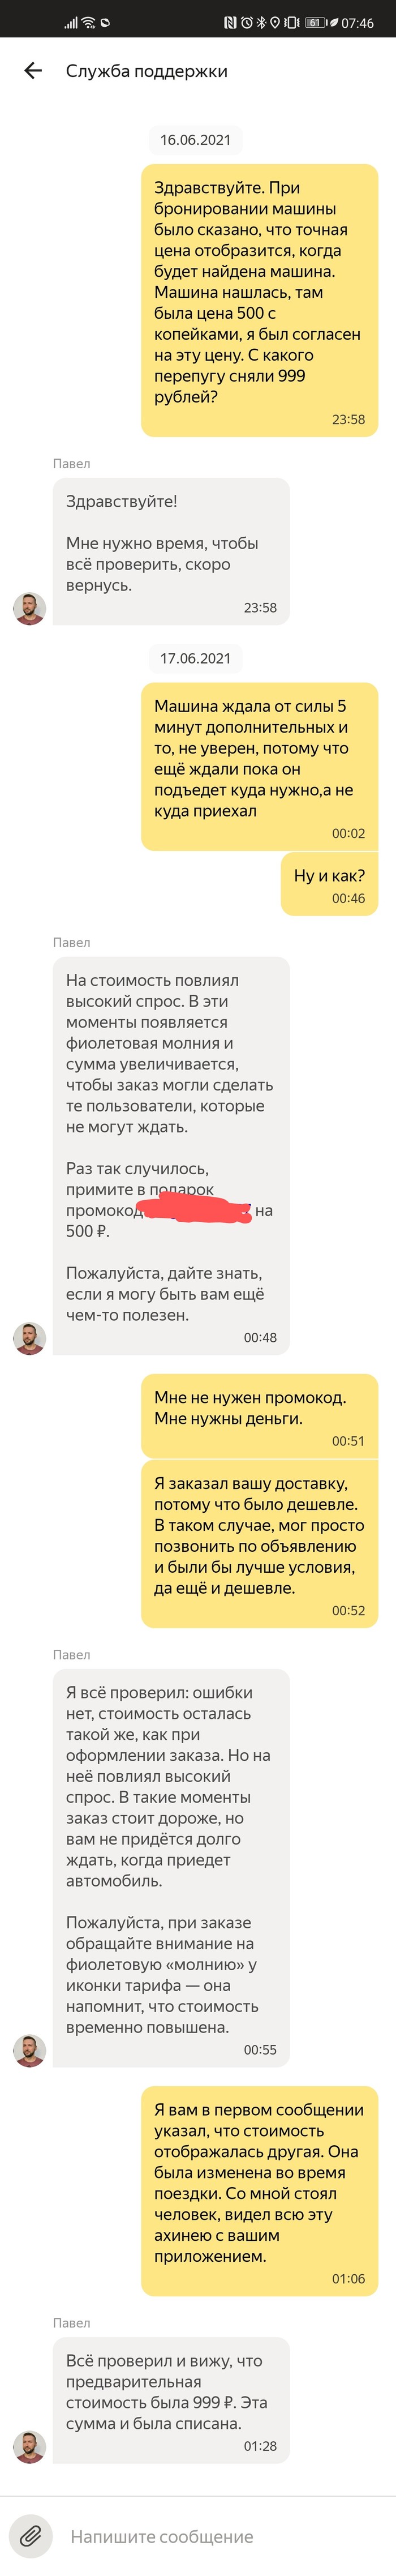 Очередной отзыв на яндекс Яндекс Такси, Яндекс, Переезд, Длиннопост, Негатив